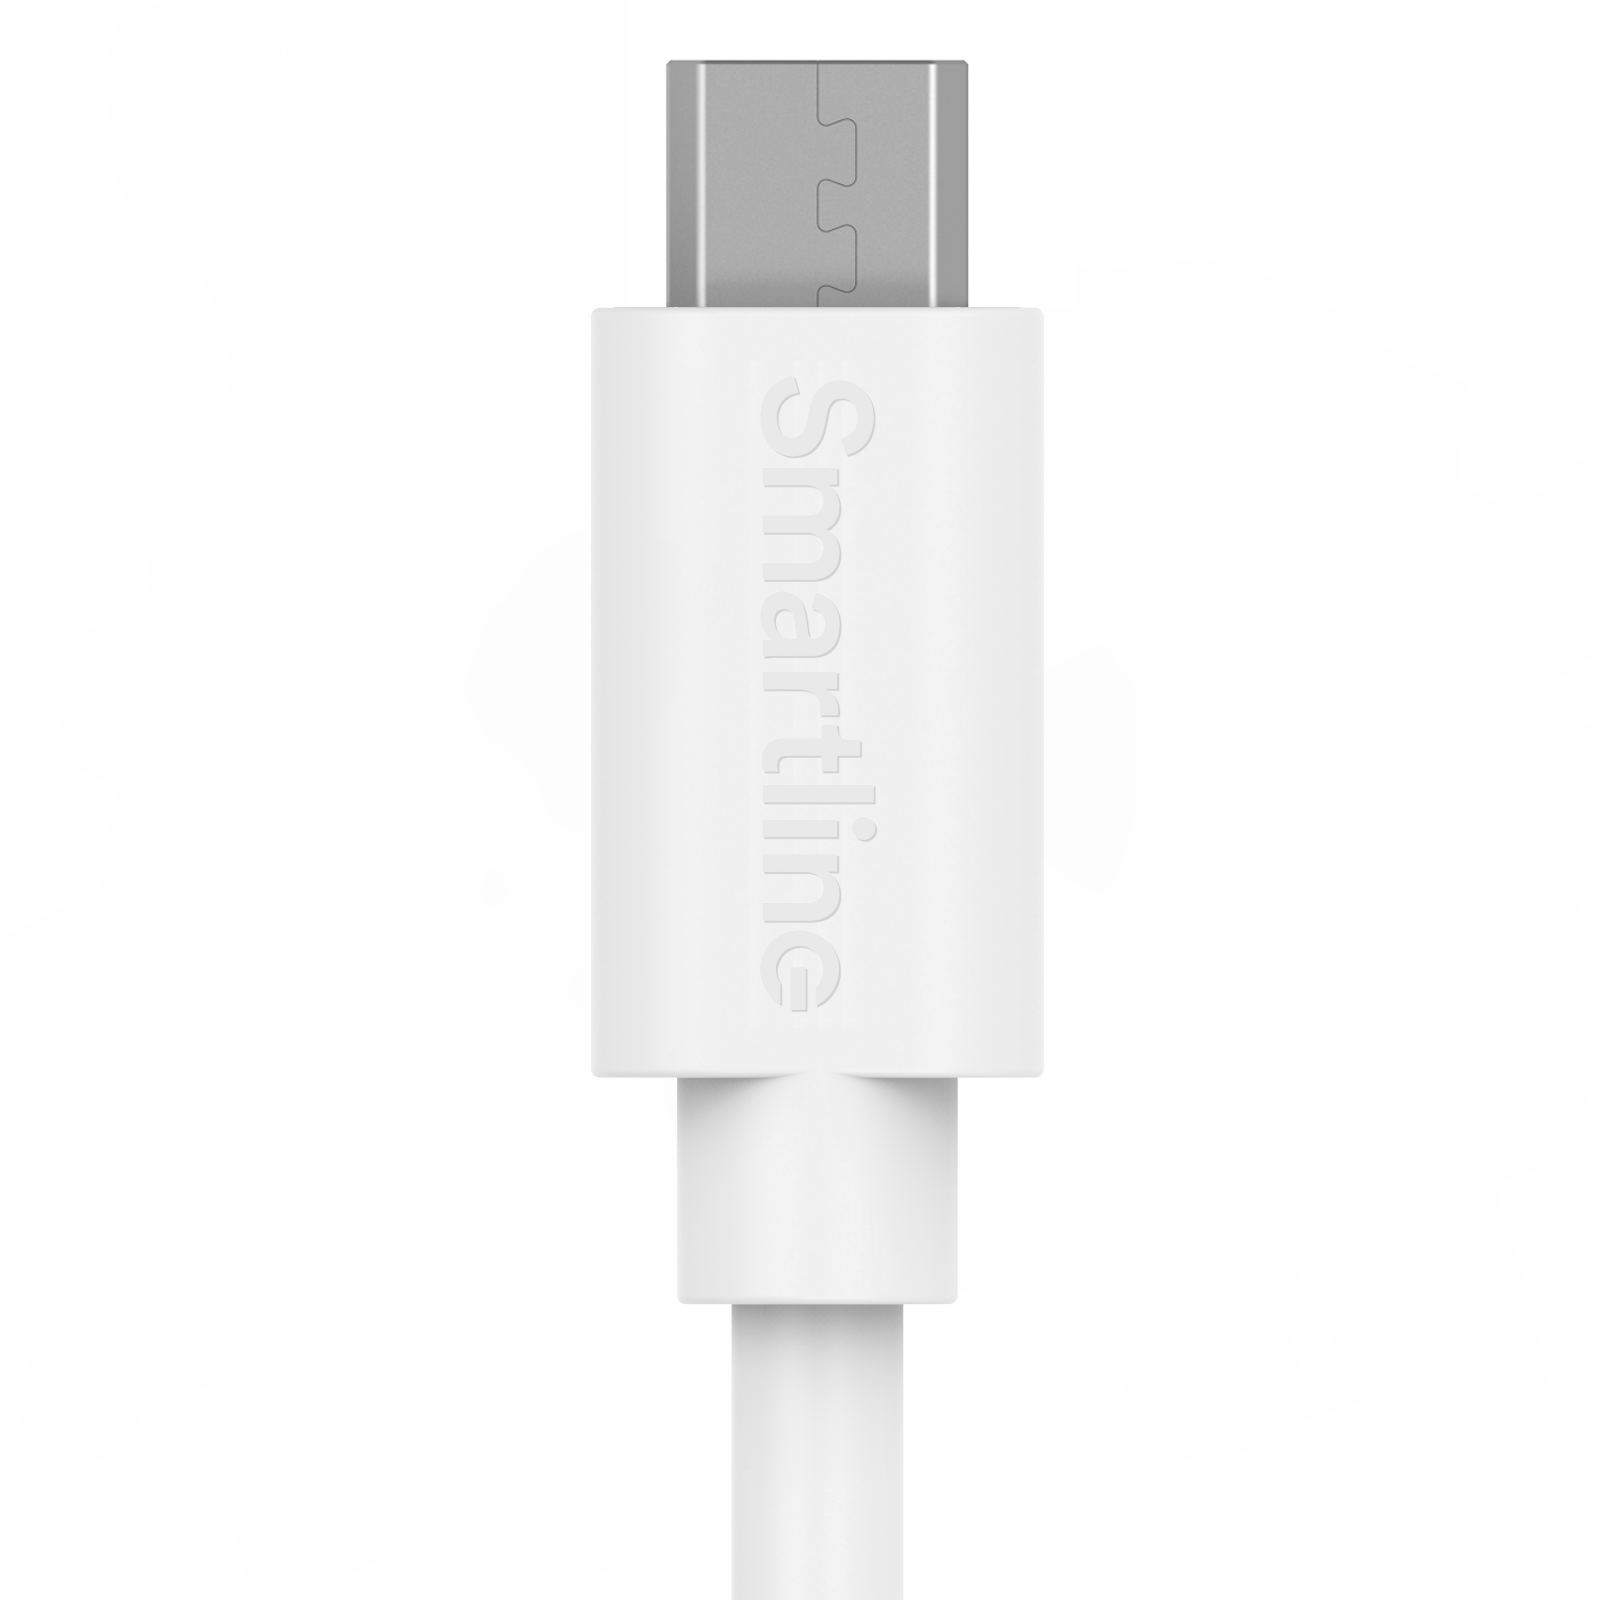 USB Cable MicroUSB 2m hvid